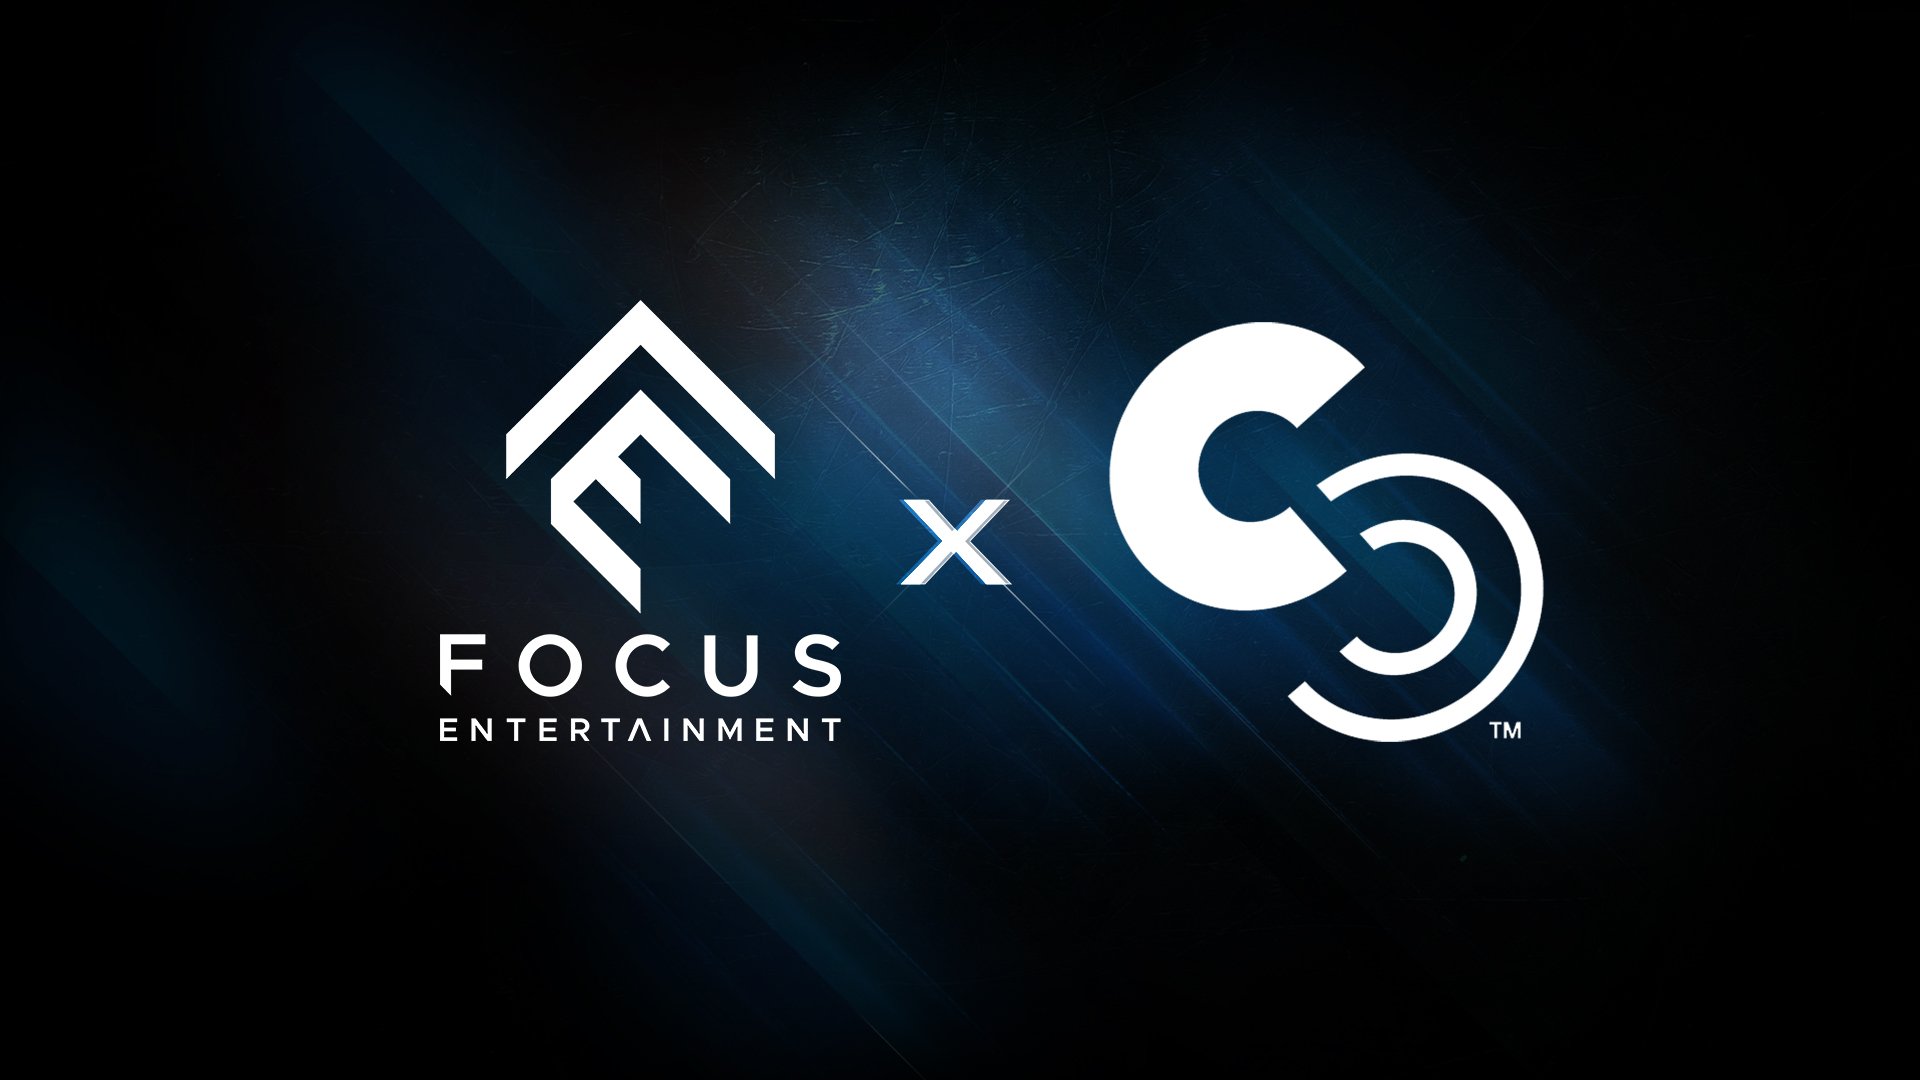 Focus Entertainment eröffnet neues Carpool-Studio, bestehend aus Ubisoft-Veteranen